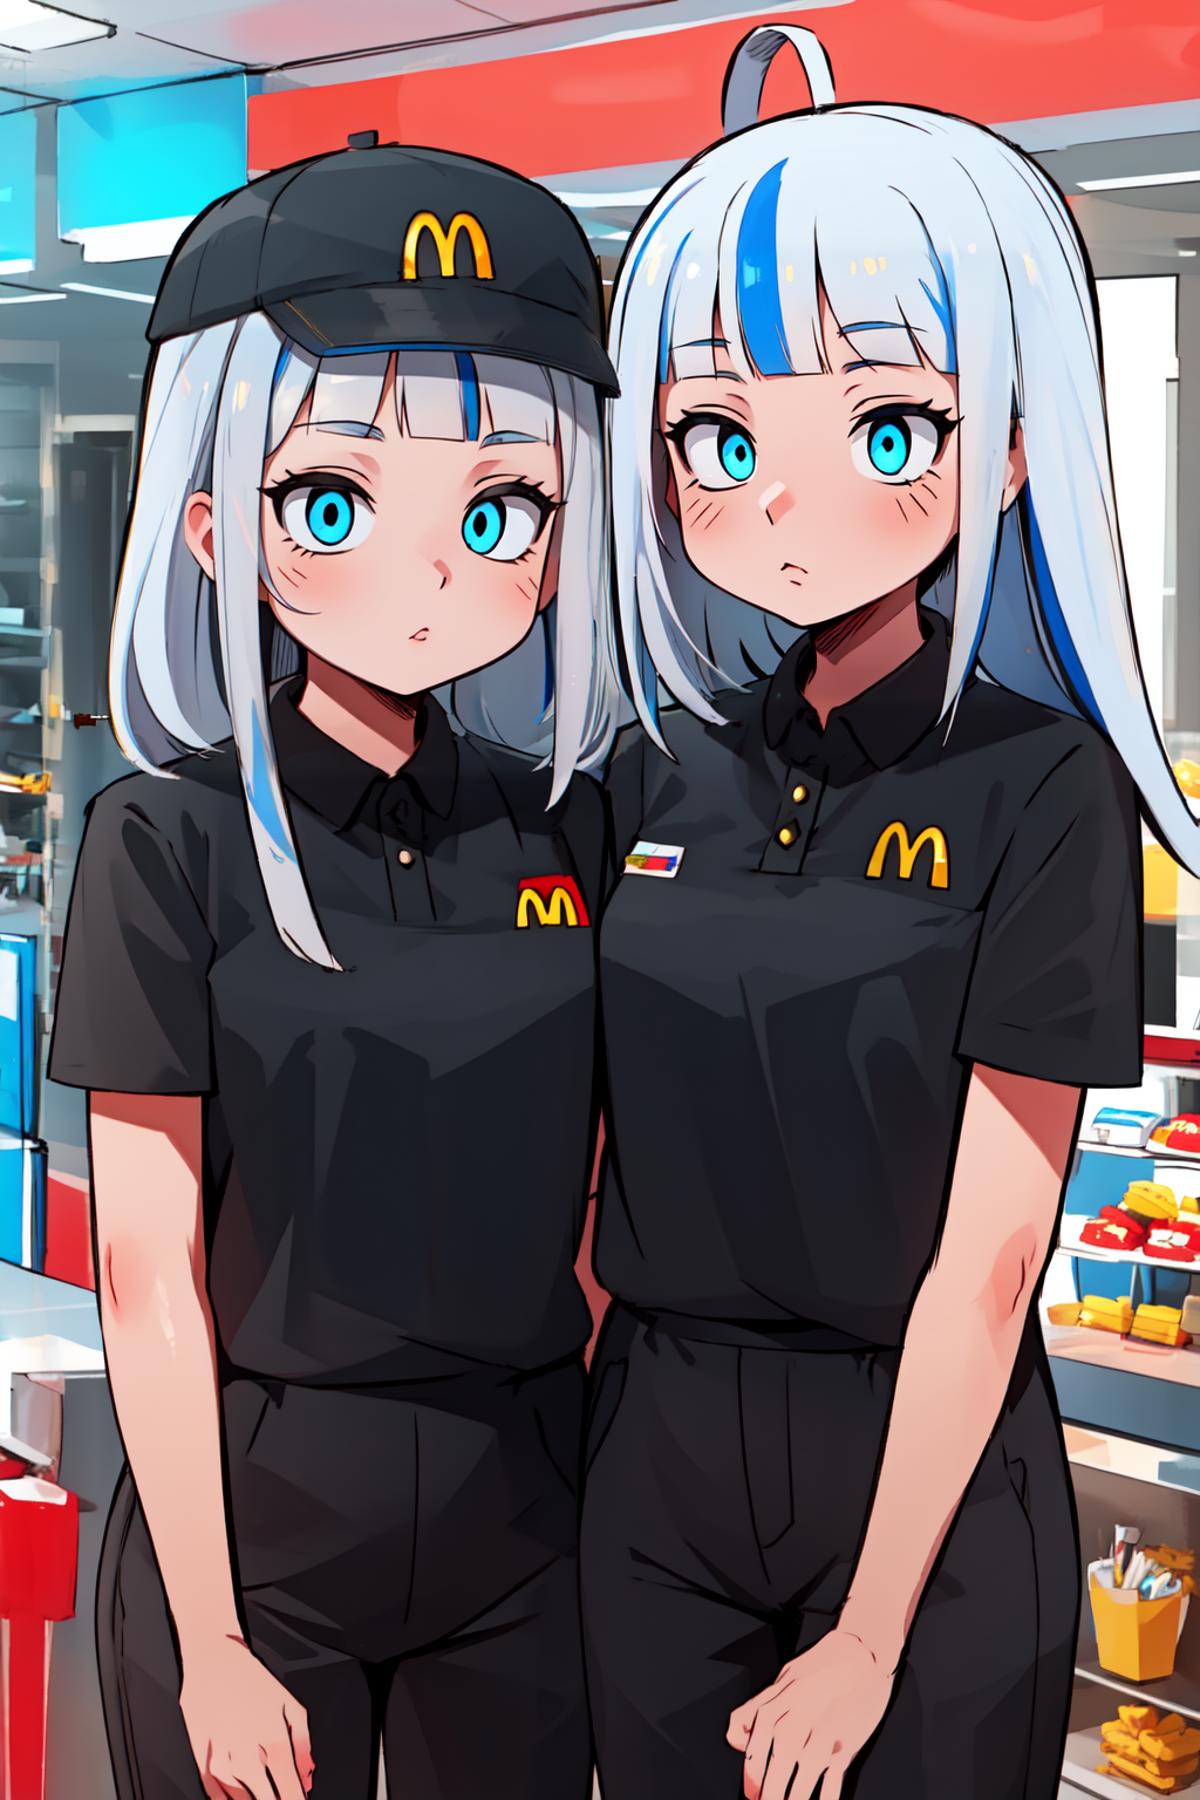 McDonalds Uniform (black) | Outfit LoRA image by PettankoPaizuri